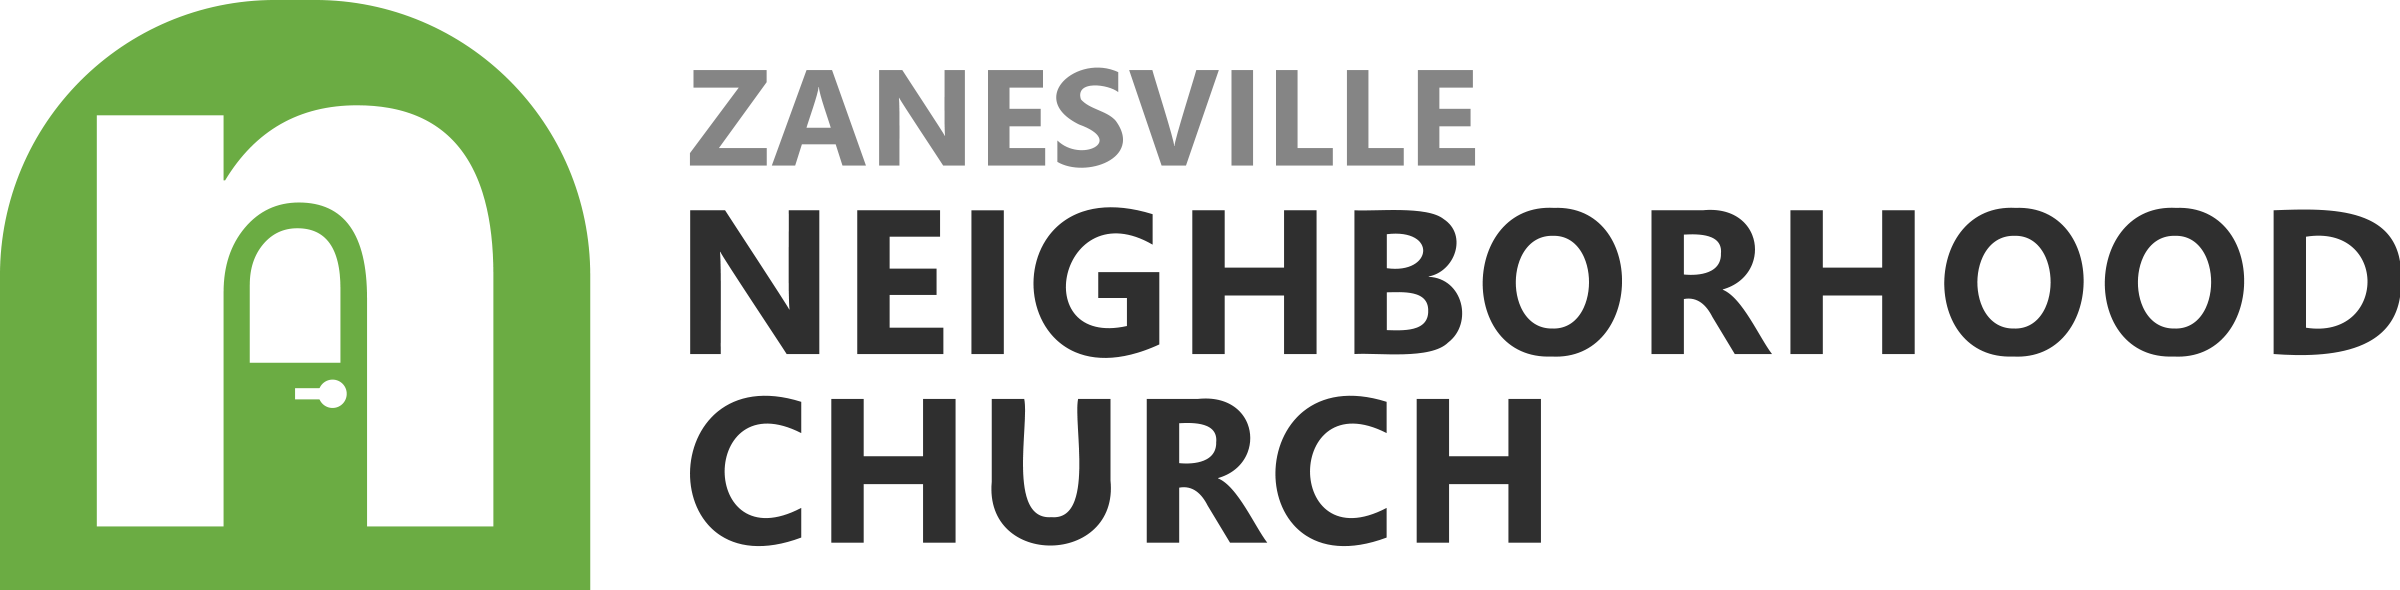 Zanesville Neighborhood Church